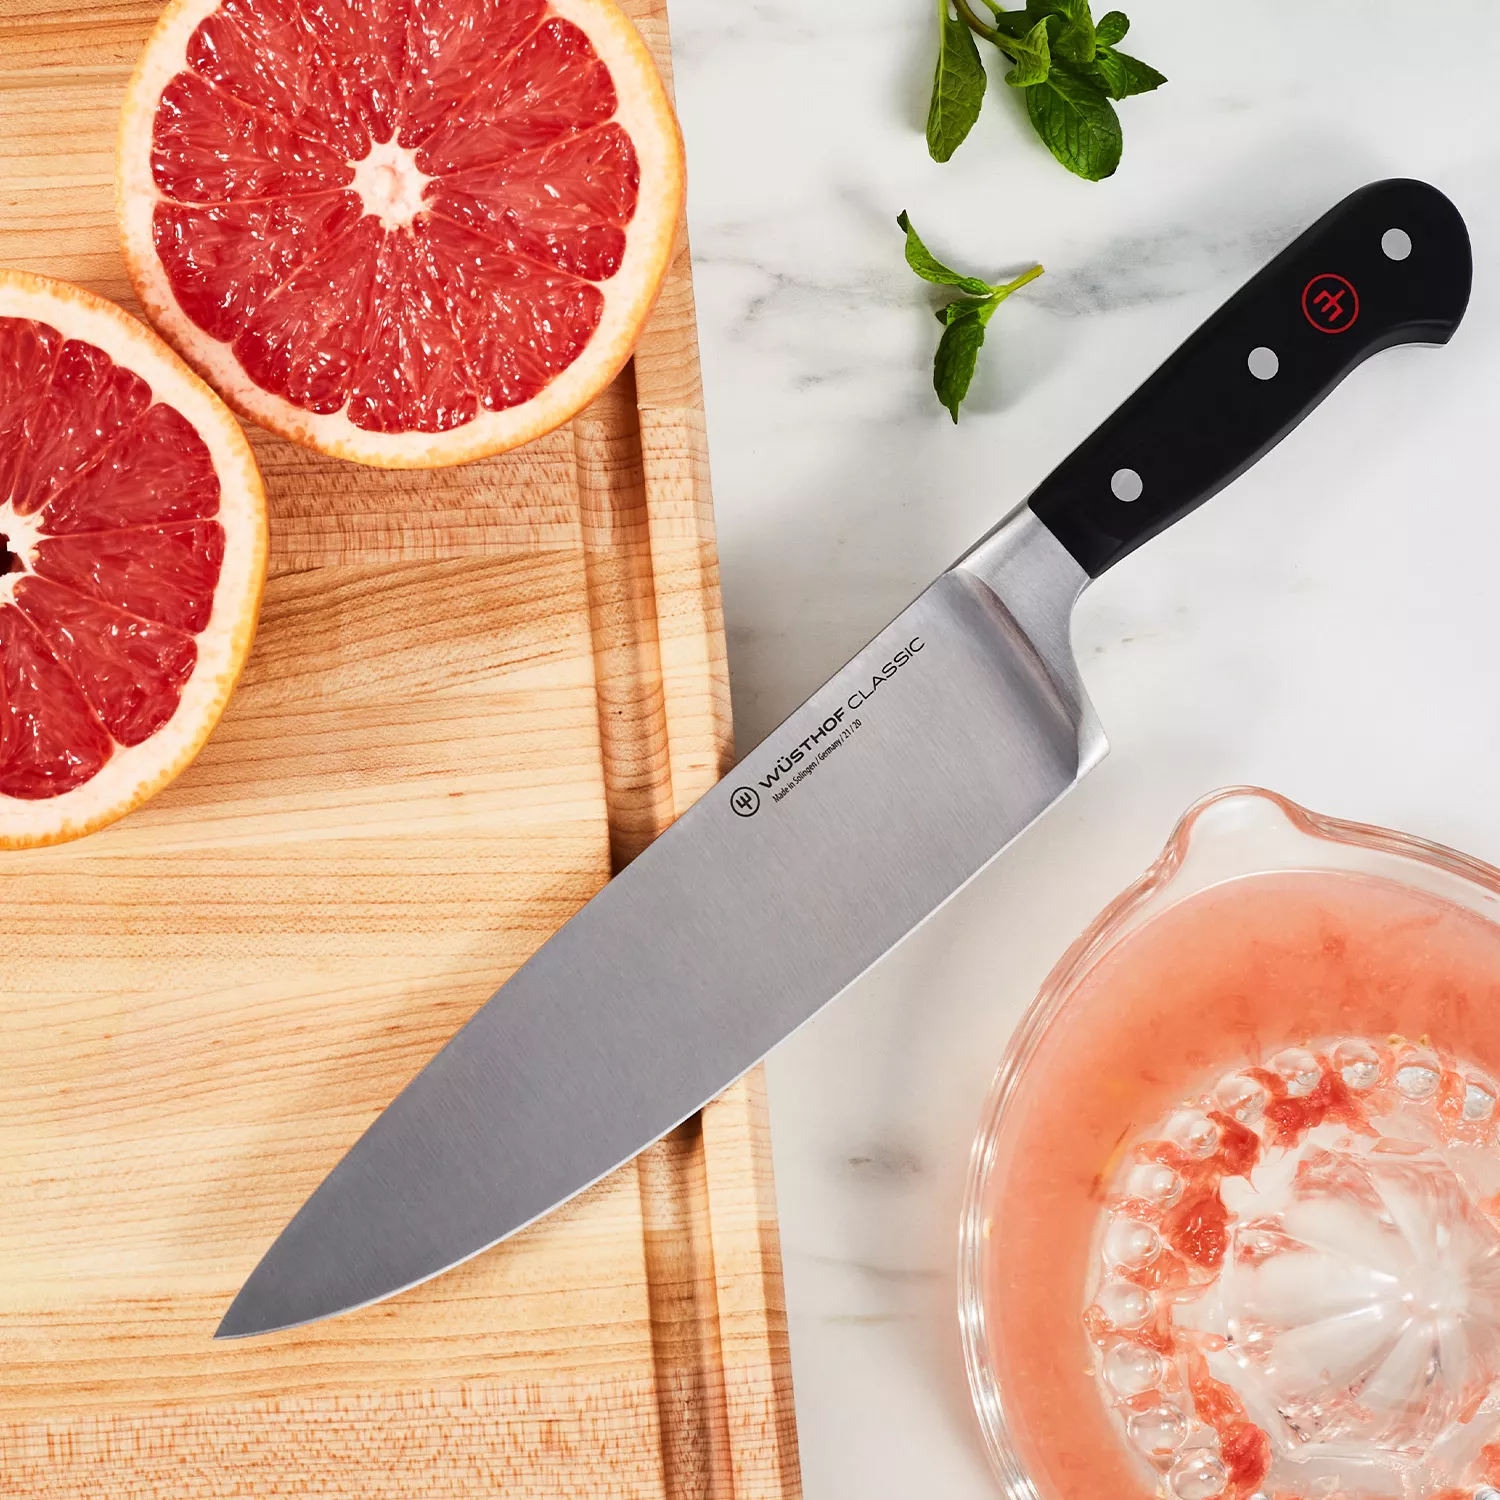 Wüsthof Classic Chef's Knife, 8